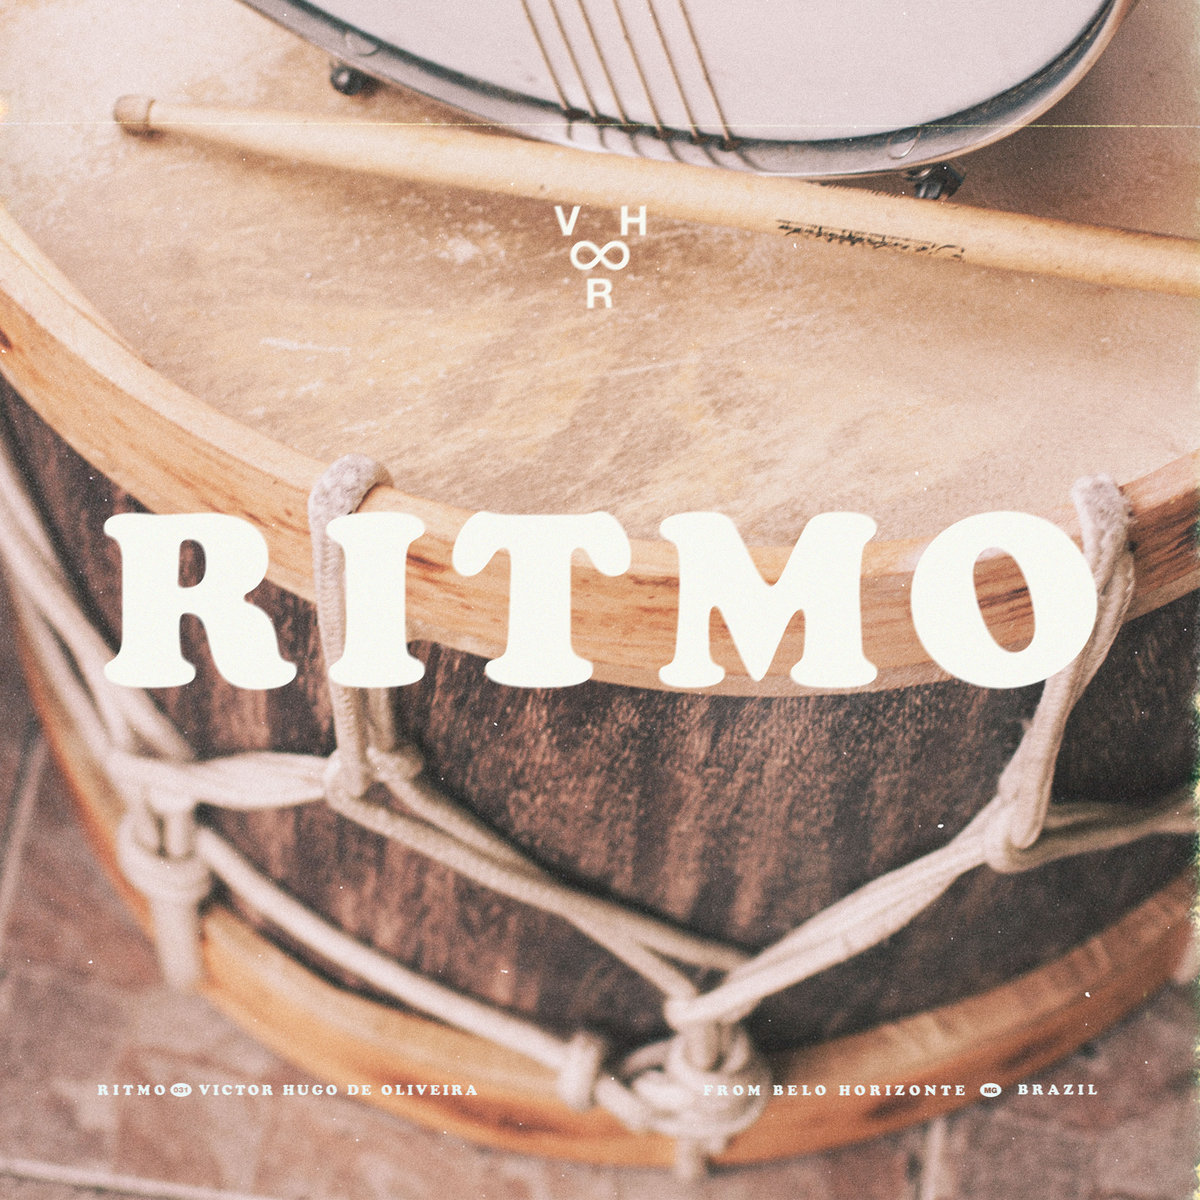 VHOOR pays homage to Samba de Coco with new album "Ritmo"